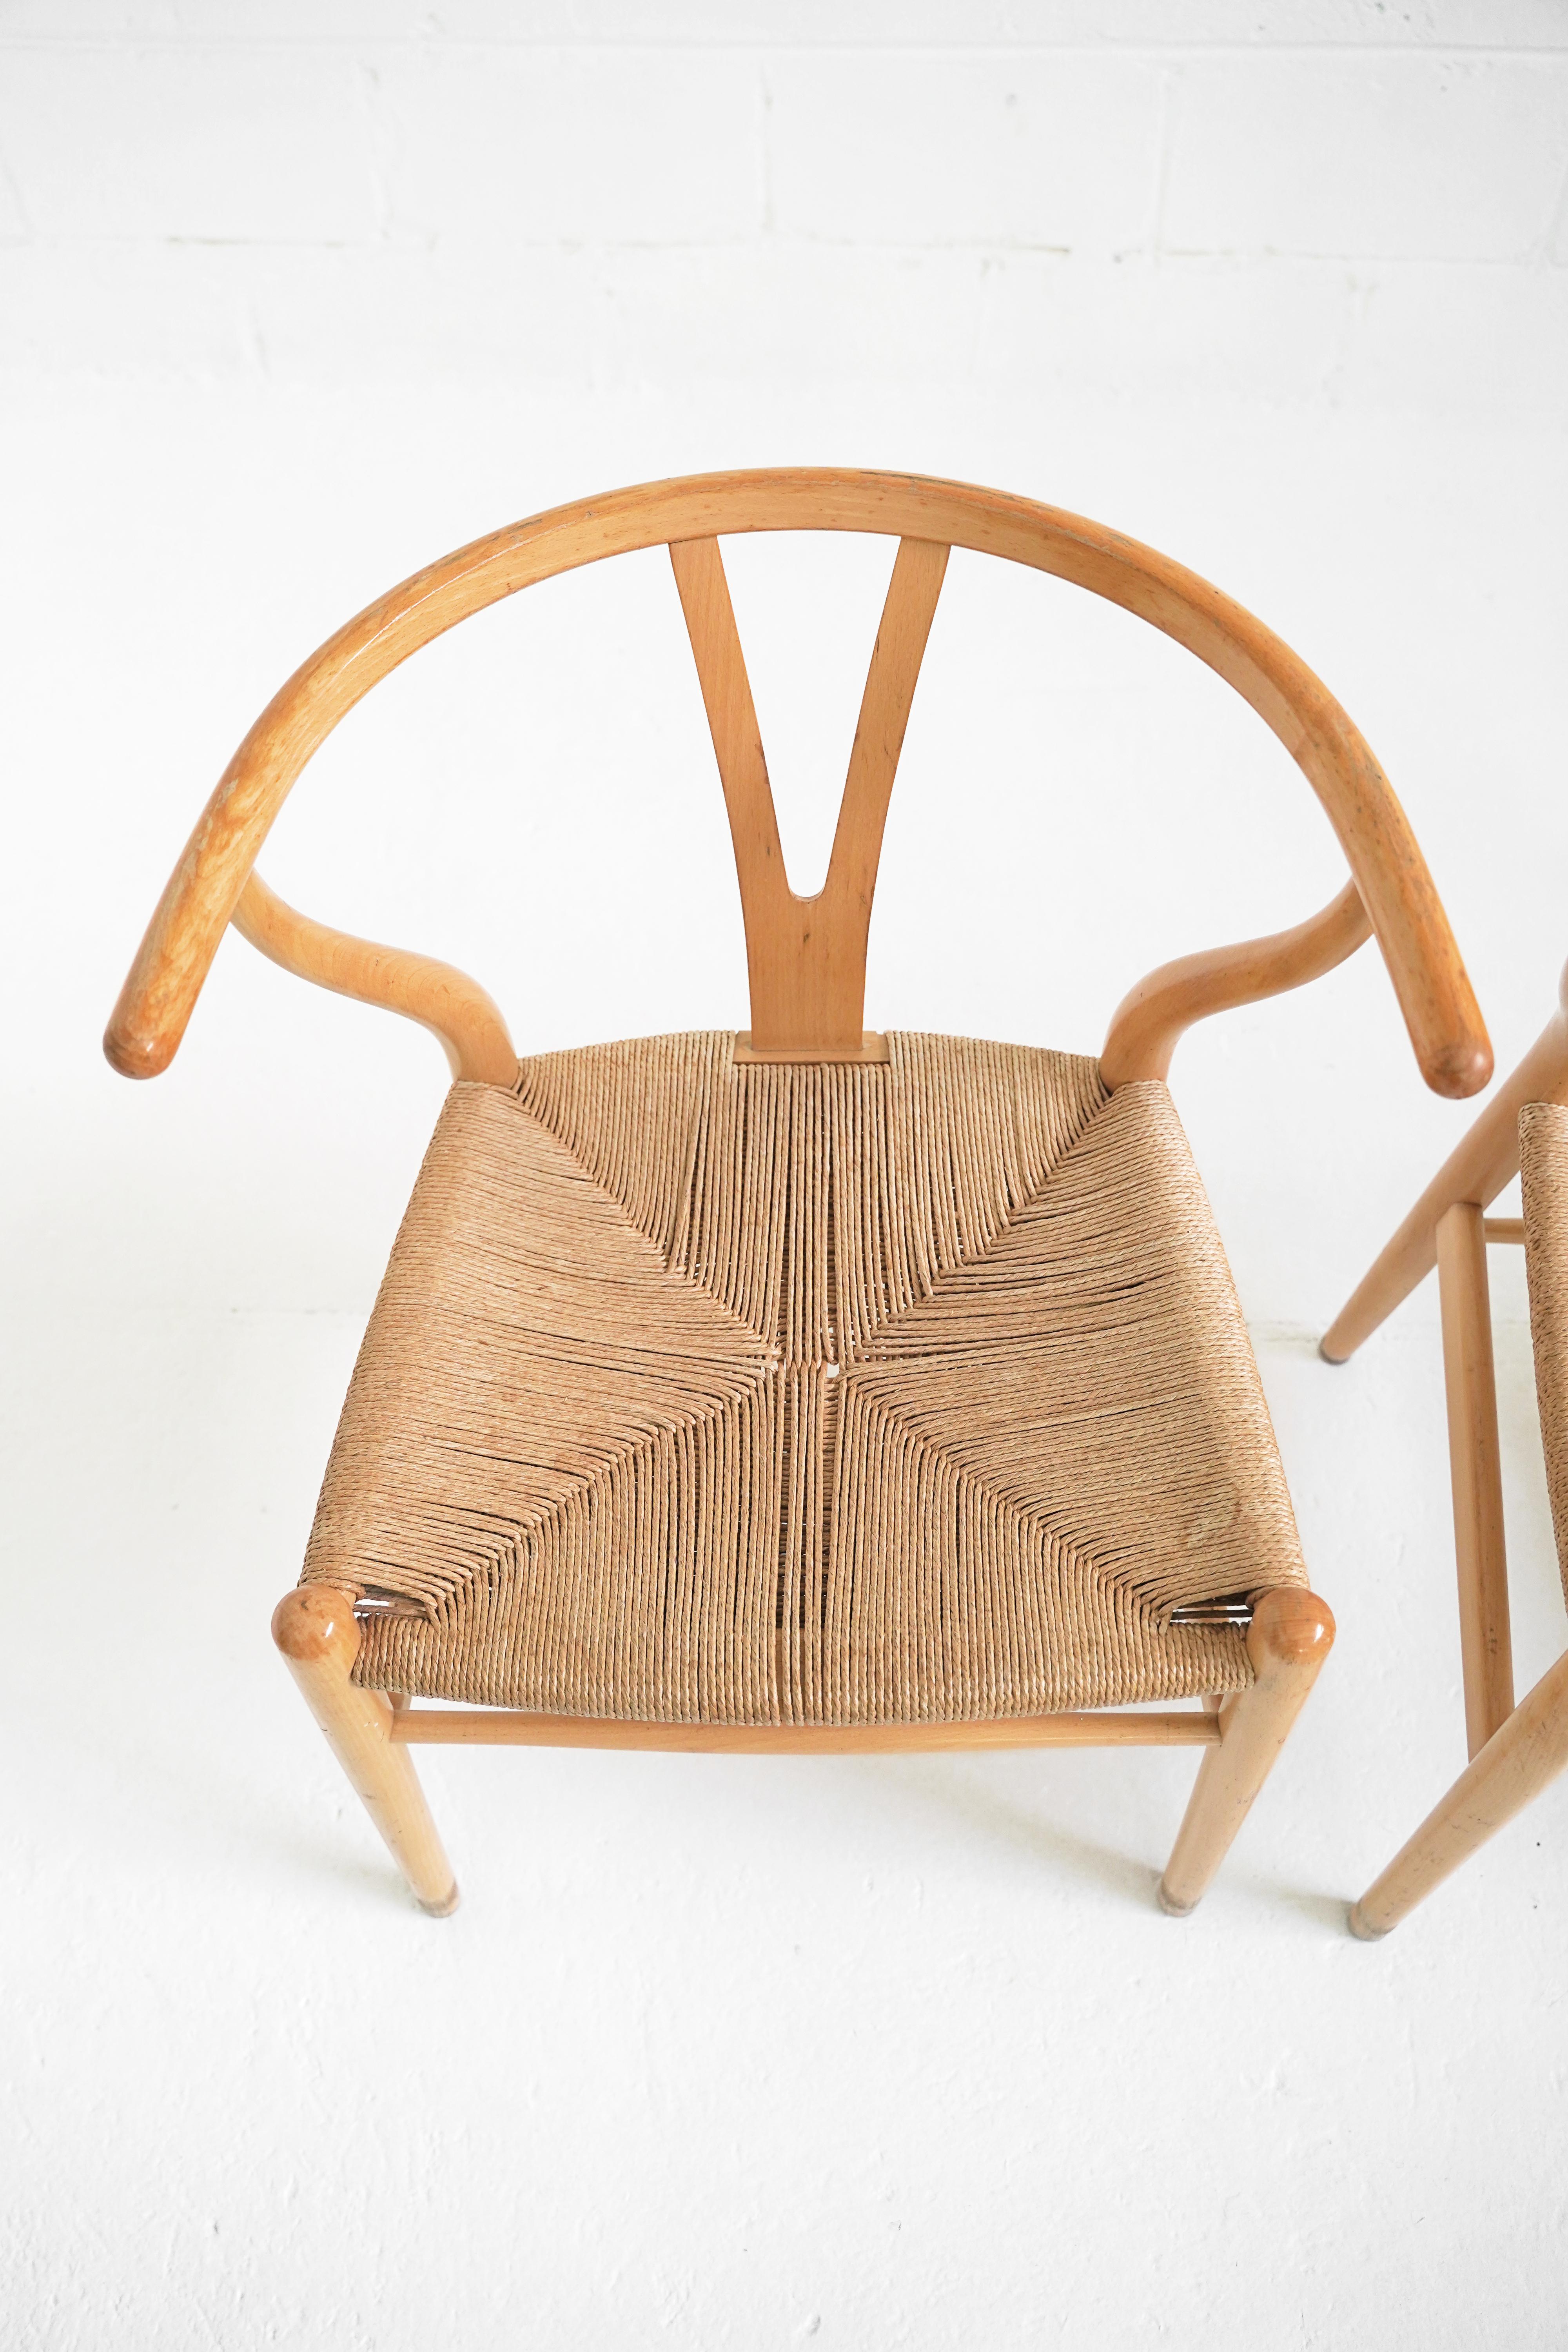 Set of 4 CH24 Wishbone Dining Chairs by Hans Wegner for Carl Hansen & Søn 5